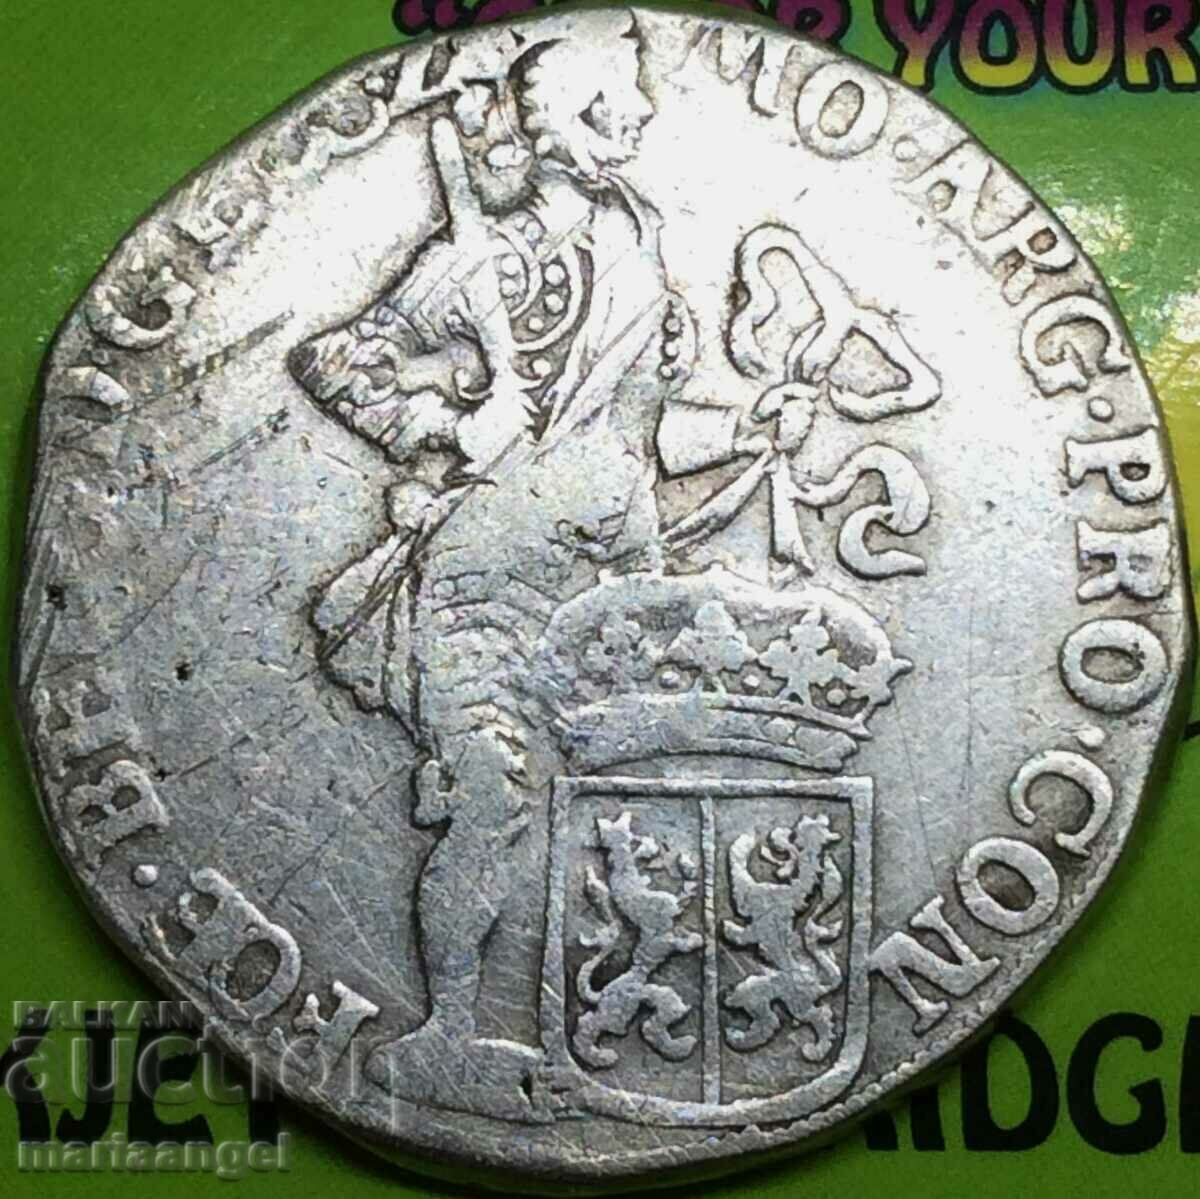 Netherlands 1 ducat 1694 40mm 27.72g silver rare